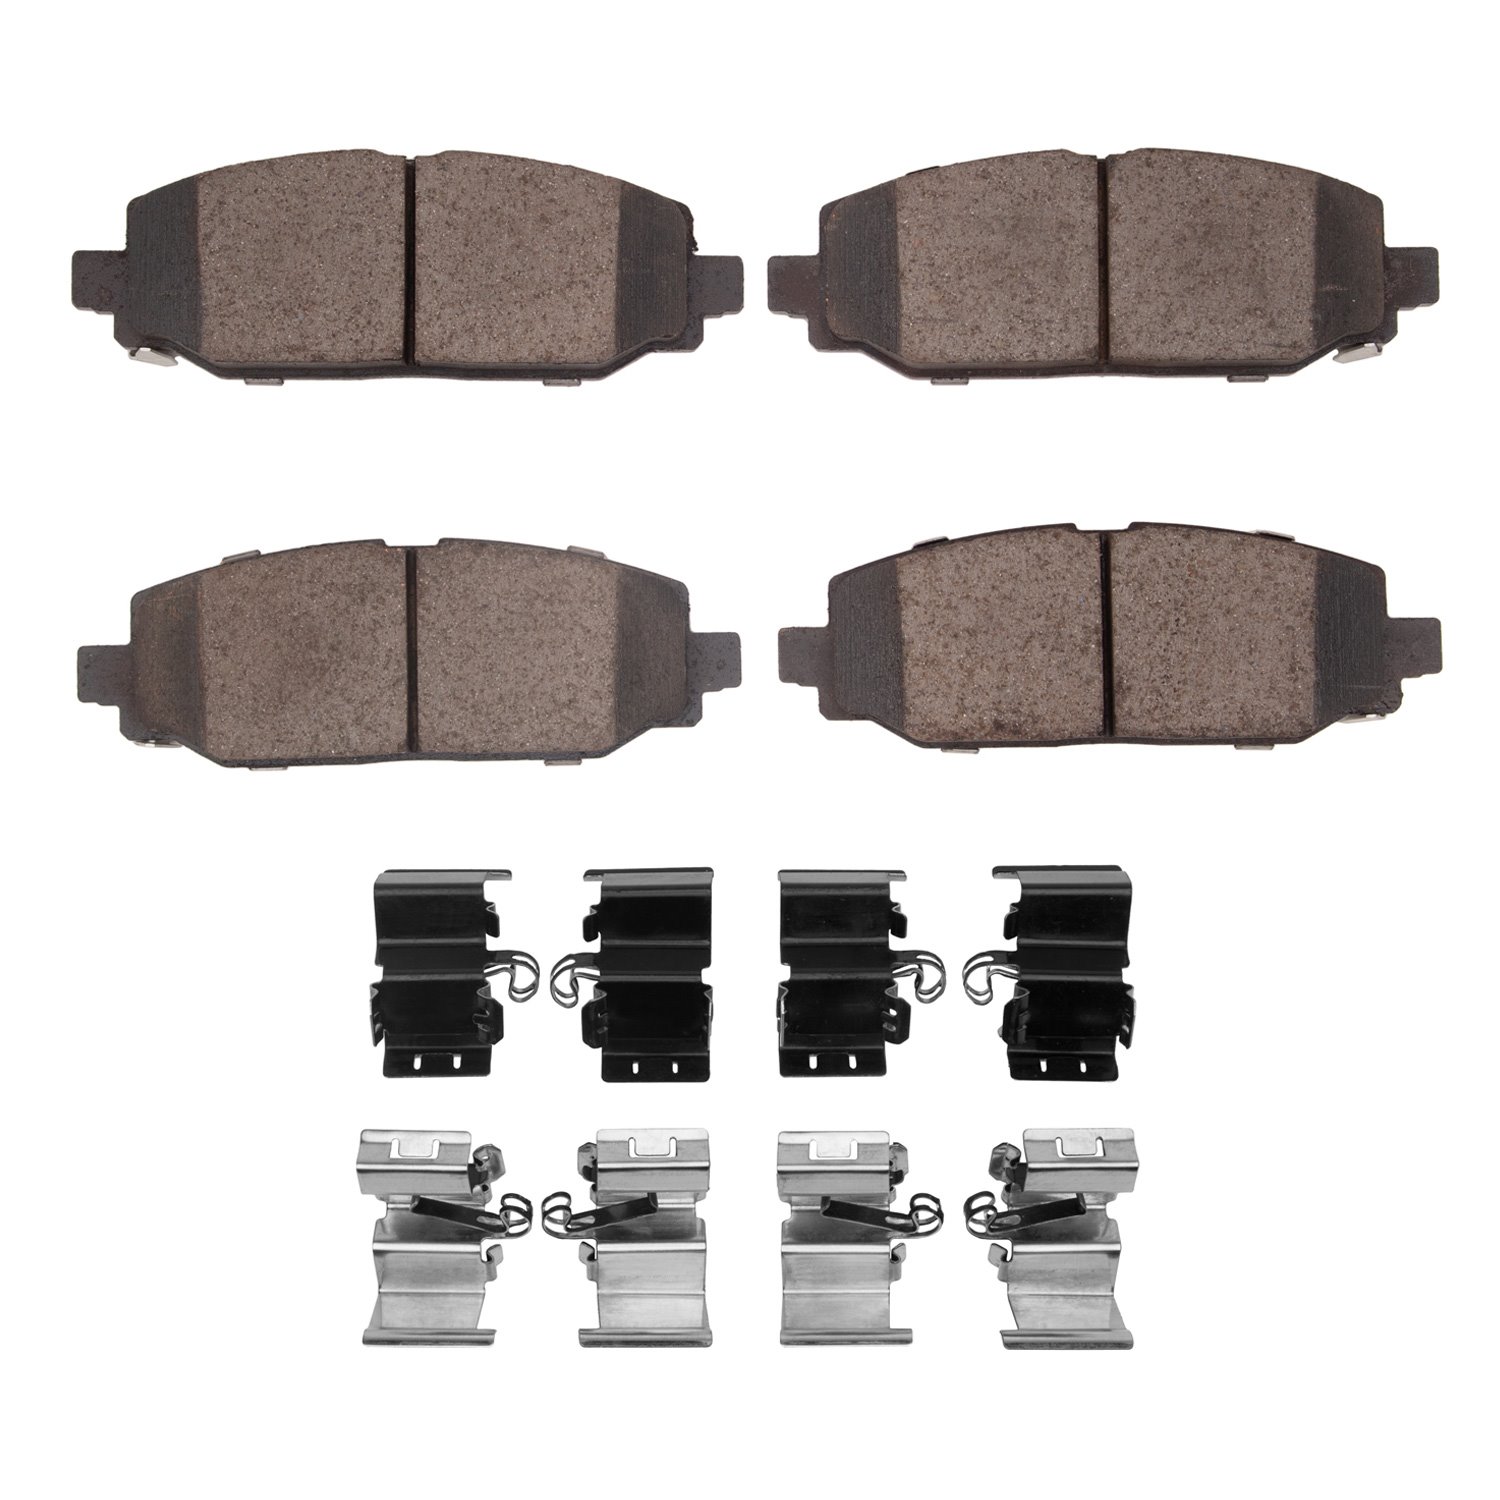 1551-2186-01 5000 Advanced Ceramic Brake Pads & Hardware Kit, Fits Select Mopar, Position: Rear